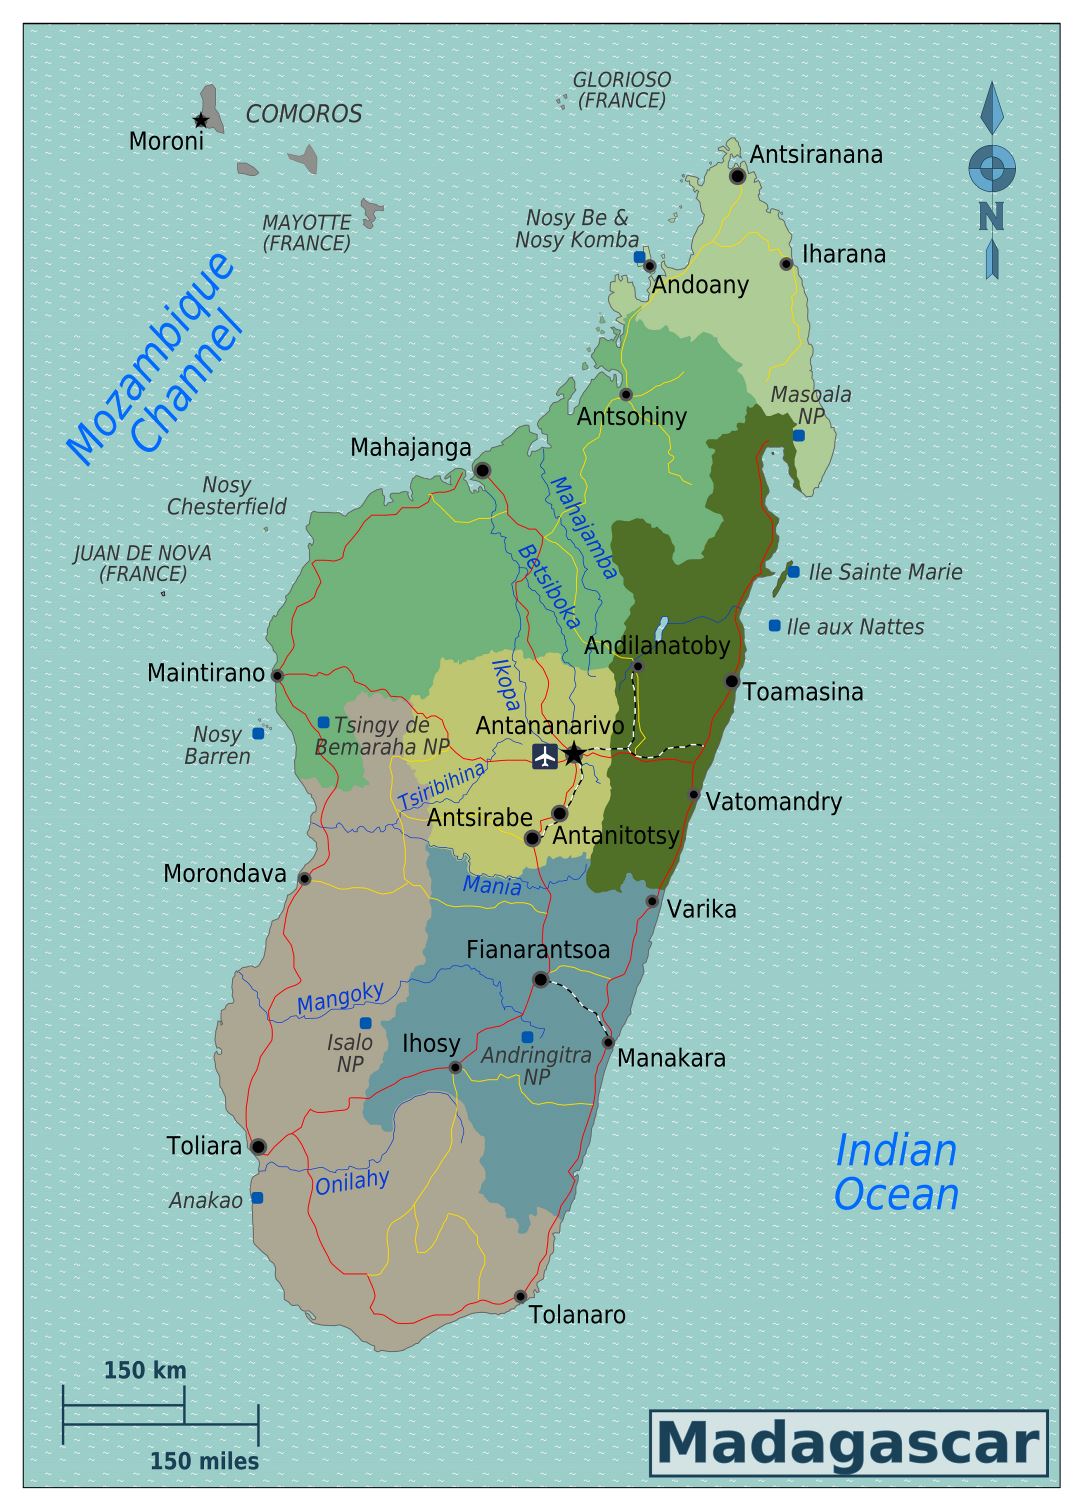 Large regions map of Madagascar